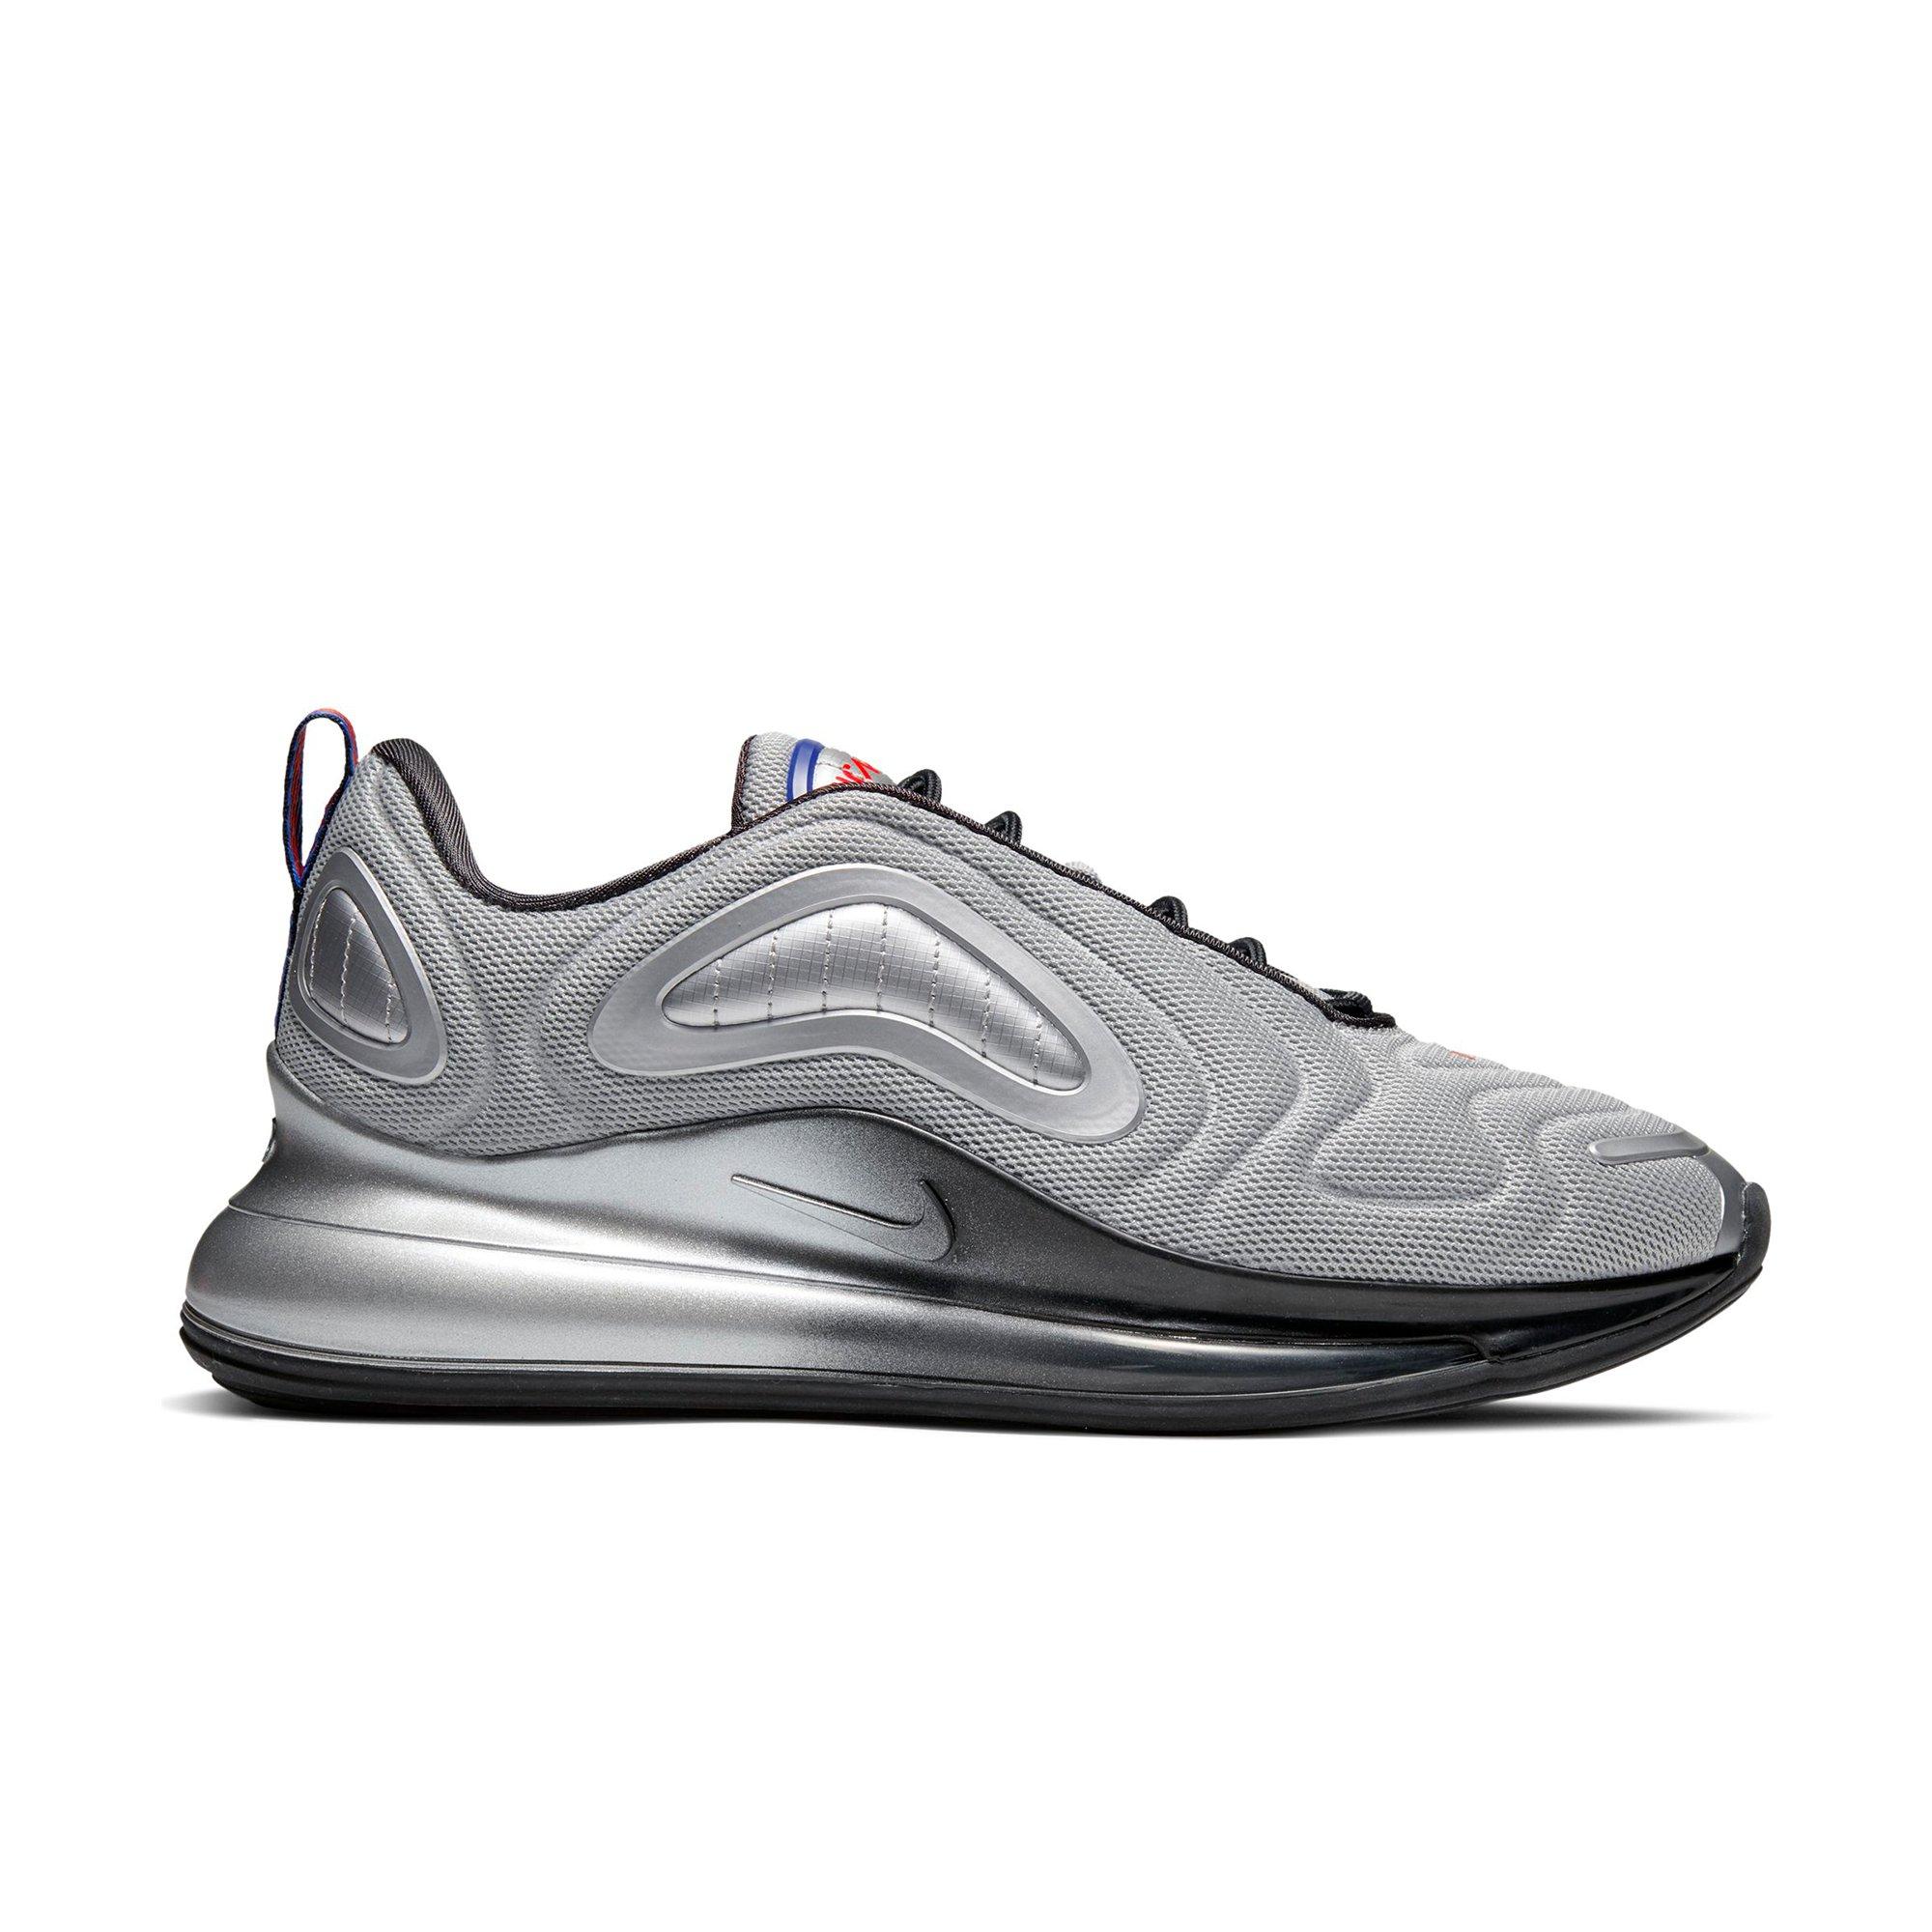 Nike Air Max 720 "Silver/Grey" Men's